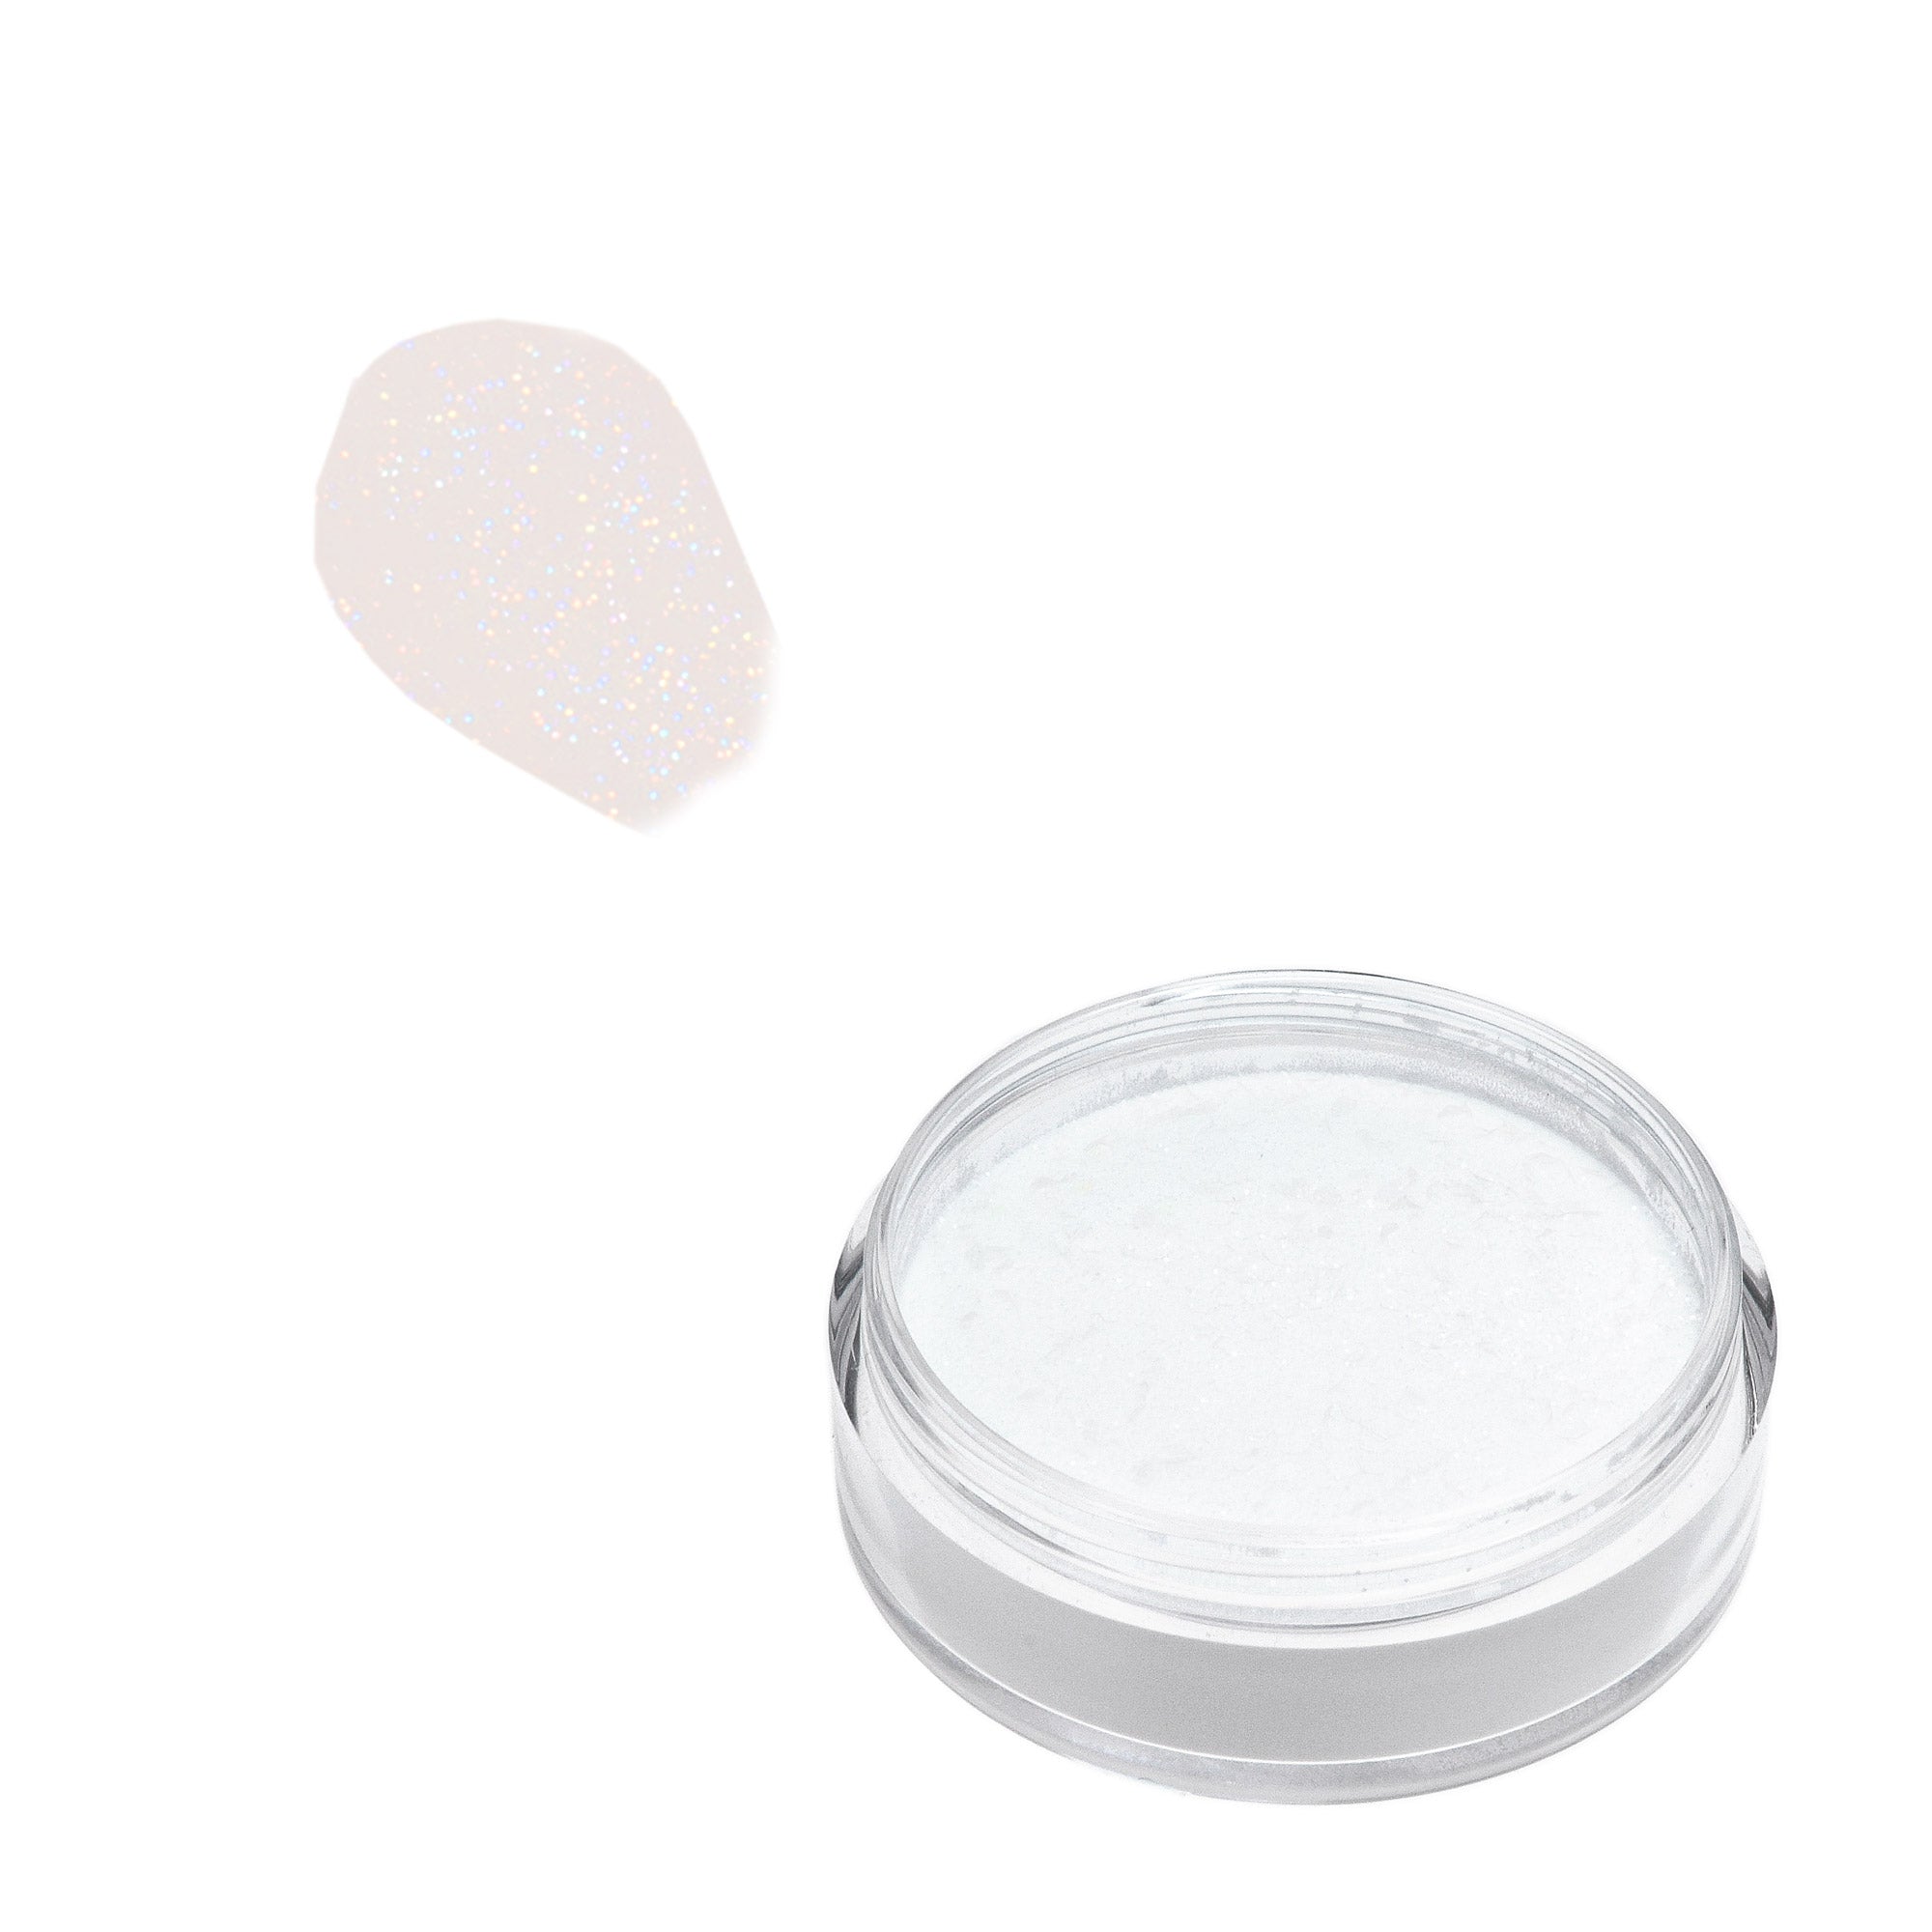 Acrylic Powder 10 g - White Glitter